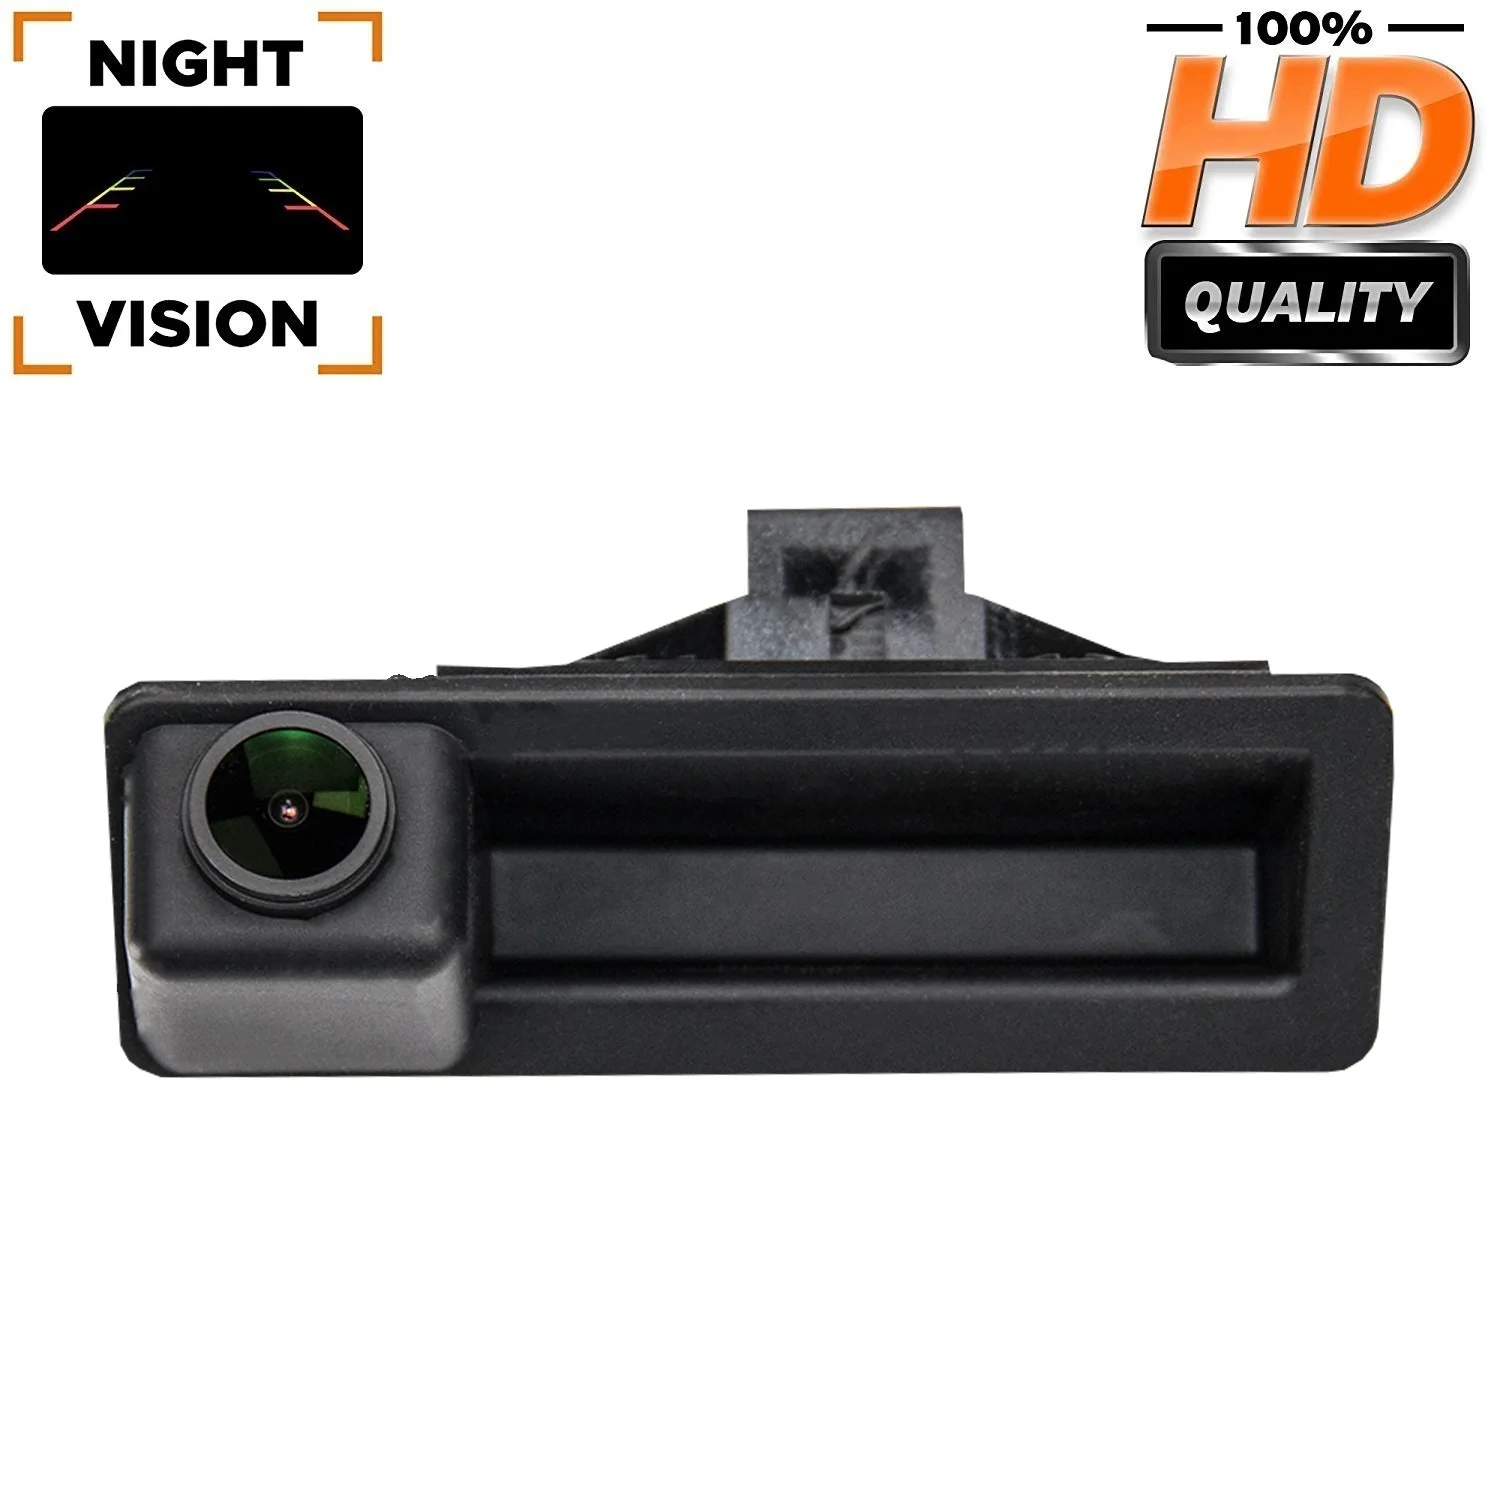 

HD 720p Rear View Night Vision Backup Camera for BMW X5 X1 X6 E39 E53 E82 E88 E84 E90 E91 E92 E93 E60 E61 E70 E71 E72 2002-2011